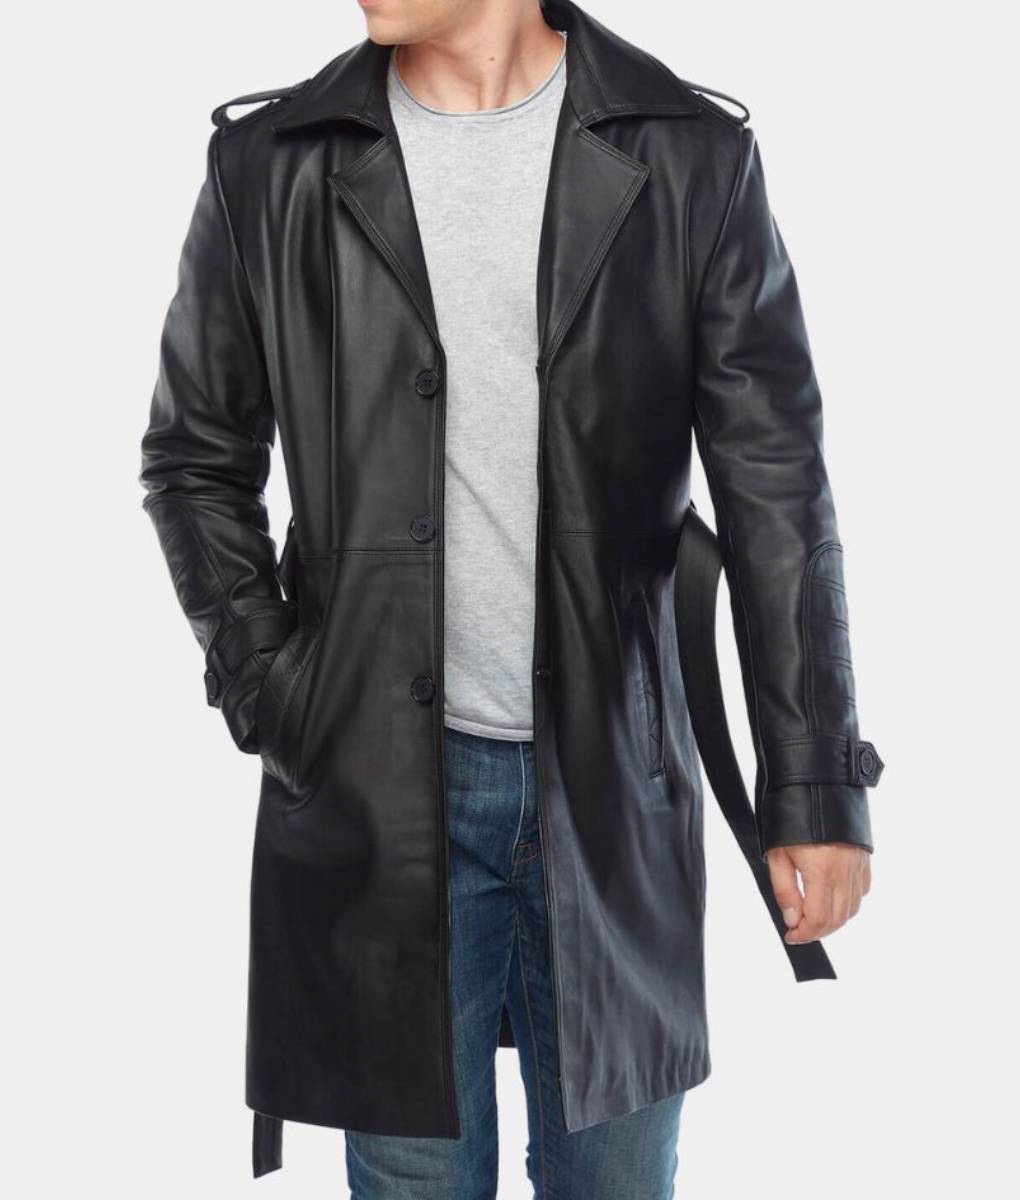 Silent Night Godlock Black Leather Jacket – 3/4 Length Car Coat with Waist Belt – Posture View – 1